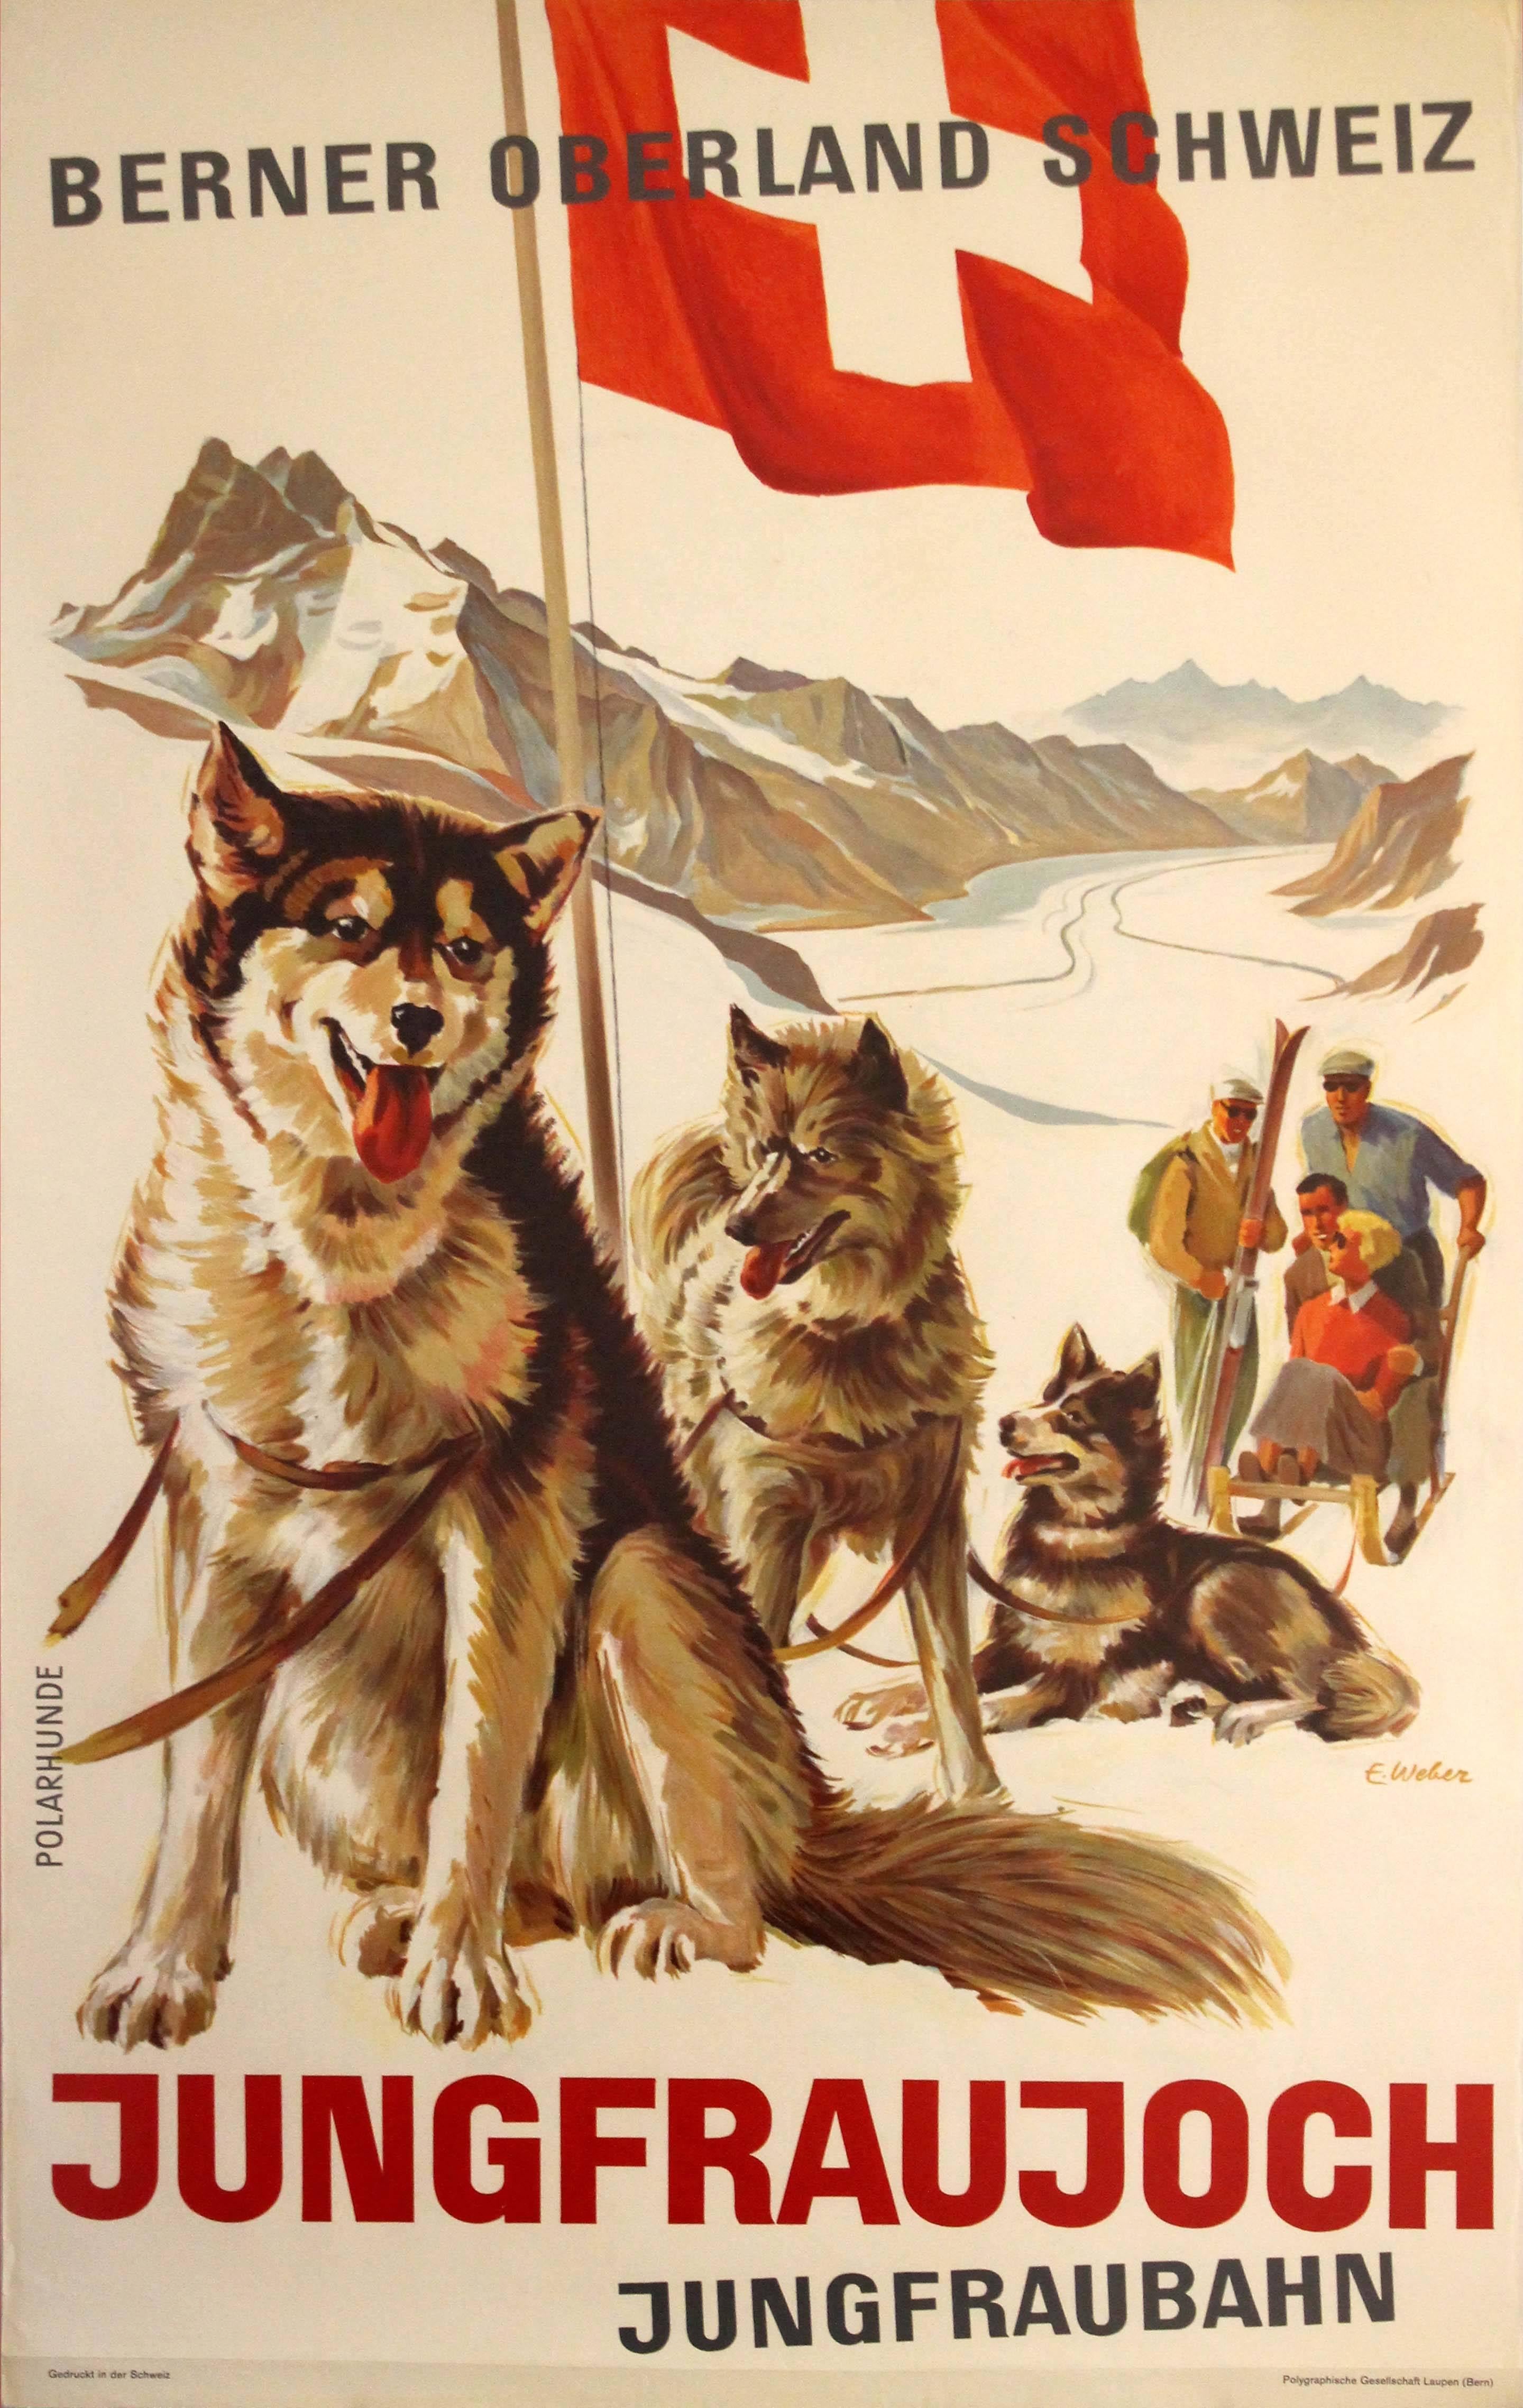 Ed Weber Print - Original Vintage Swiss Travel Poster For Jungfraujoch Switzerland - Polar Dogs